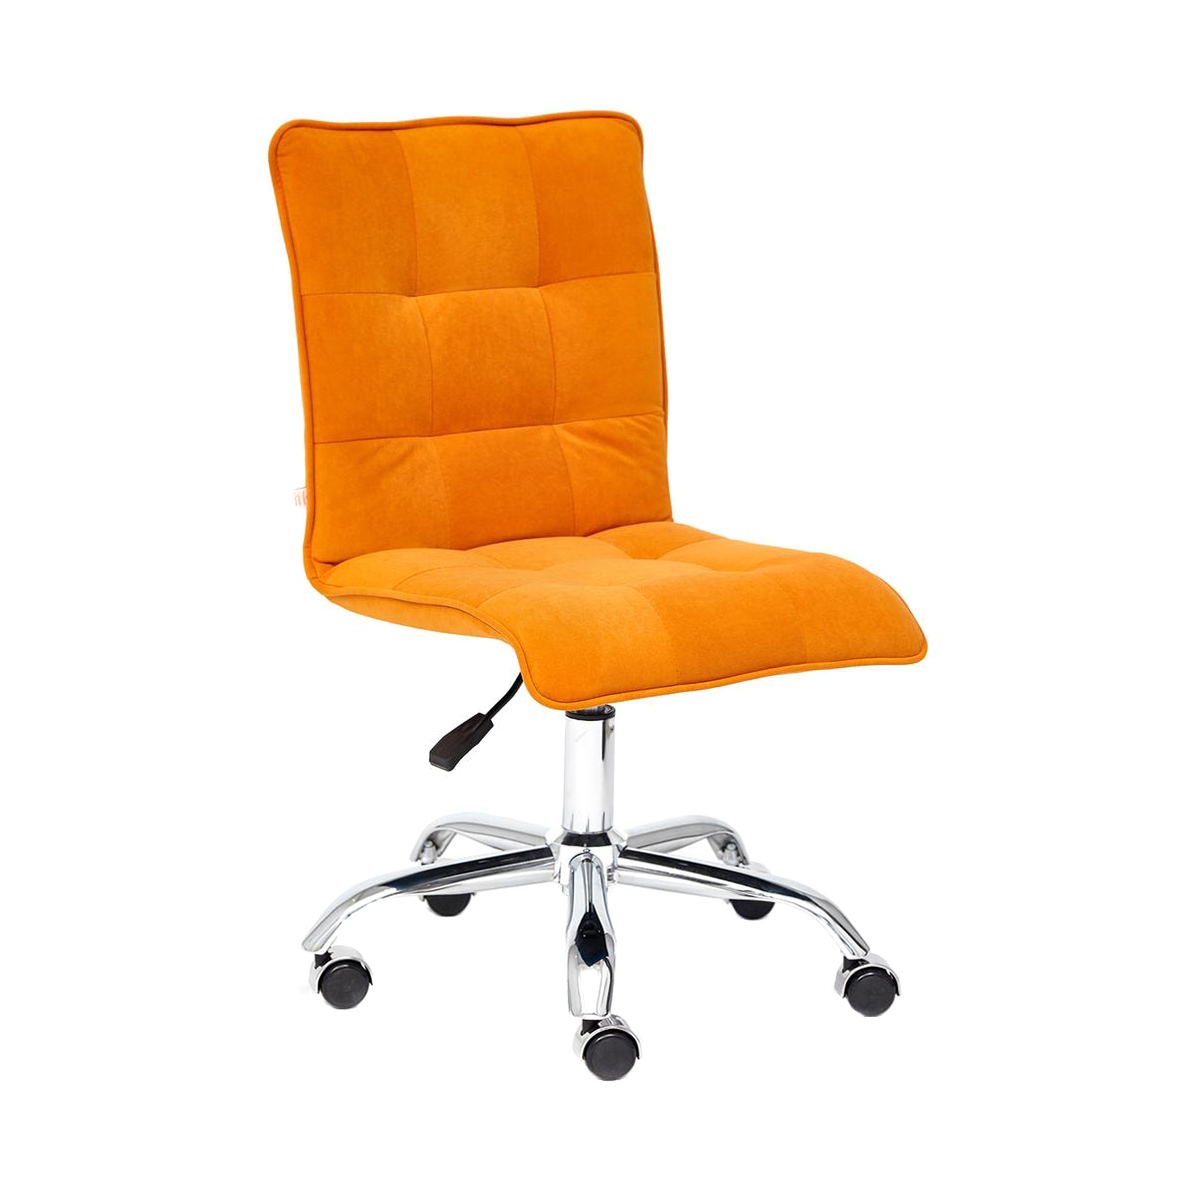 Кресло офисное TC до 100 кг 96х45х40 см оранжевый кресло офисное tc до 100 кг 96х45х40 см синий